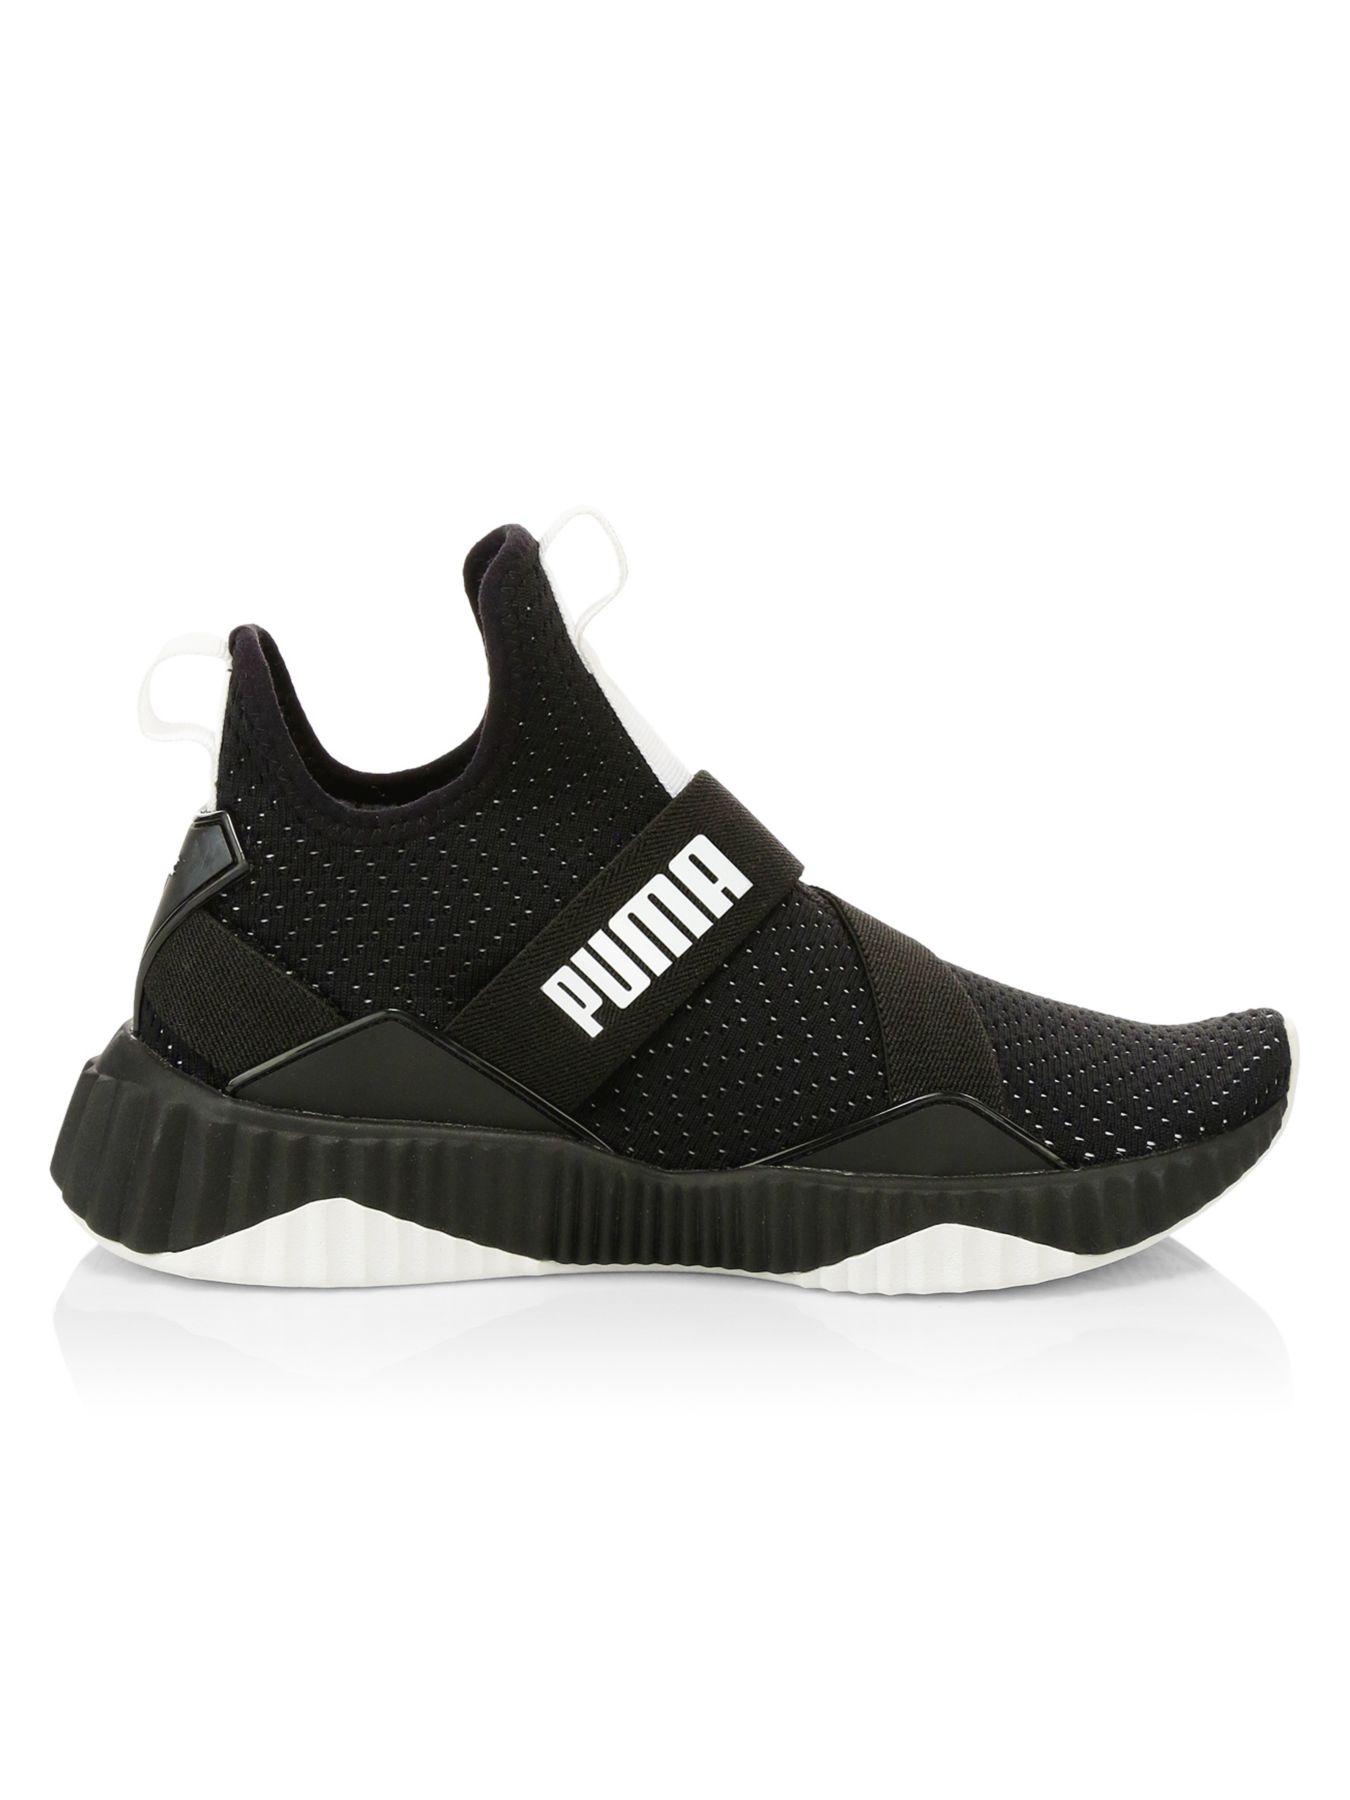 PUMA Defy Mid Core Shoes in Black/White (Black) | Lyst